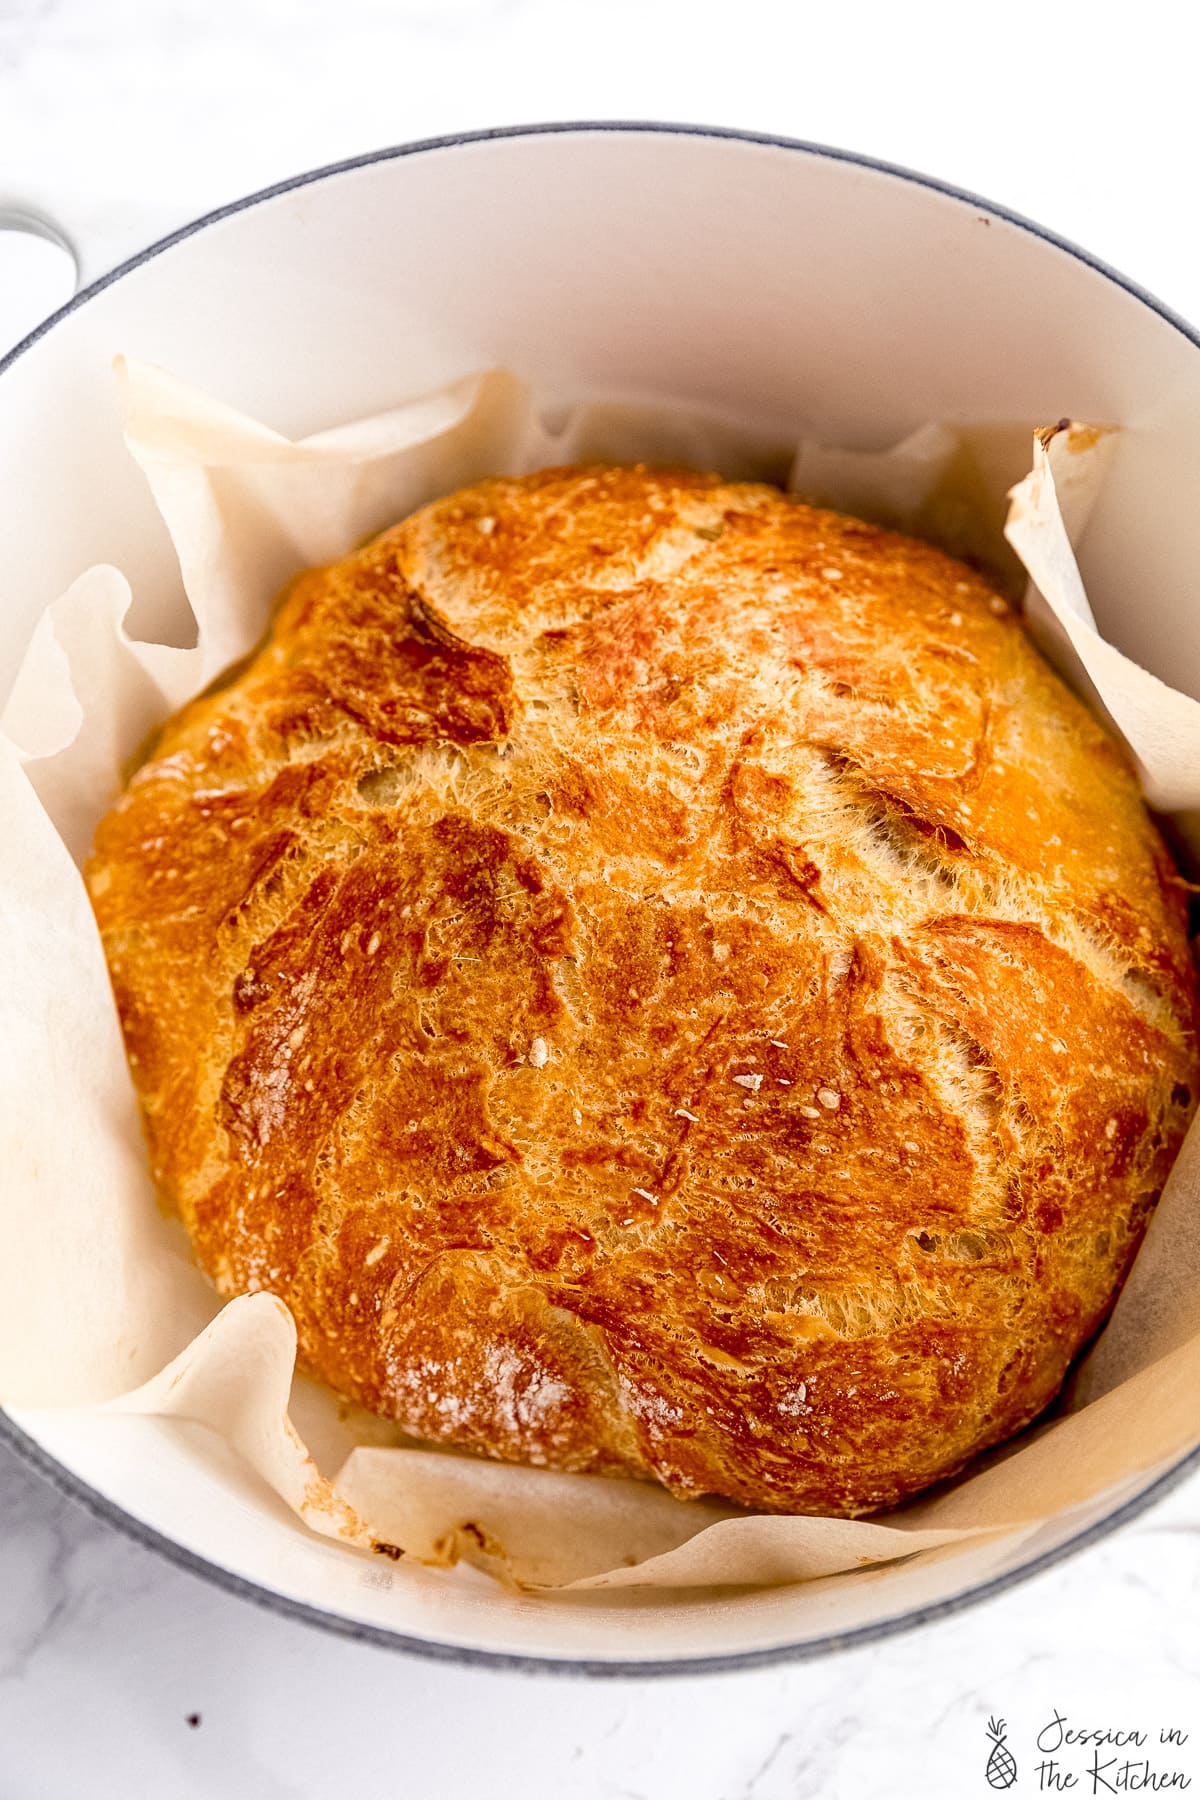 https://jessicainthekitchen.com/wp-content/uploads/2020/05/No-Knead-Bread-Dutch-Oven-Bread-31.jpg